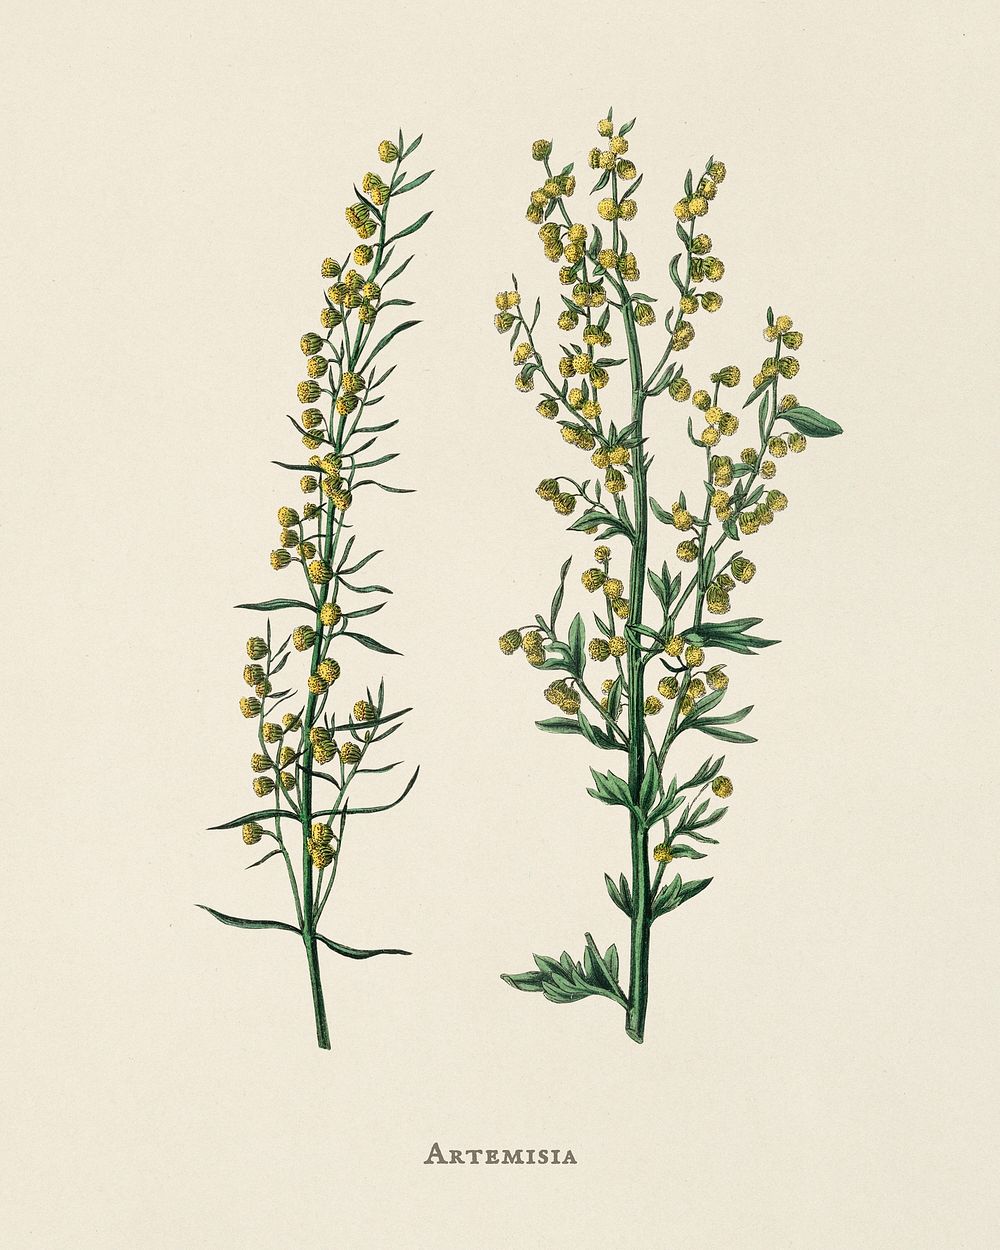 Mugwort (Artemisia) illustration from Medical Botany (1836) by John Stephenson and James Morss Churchill.